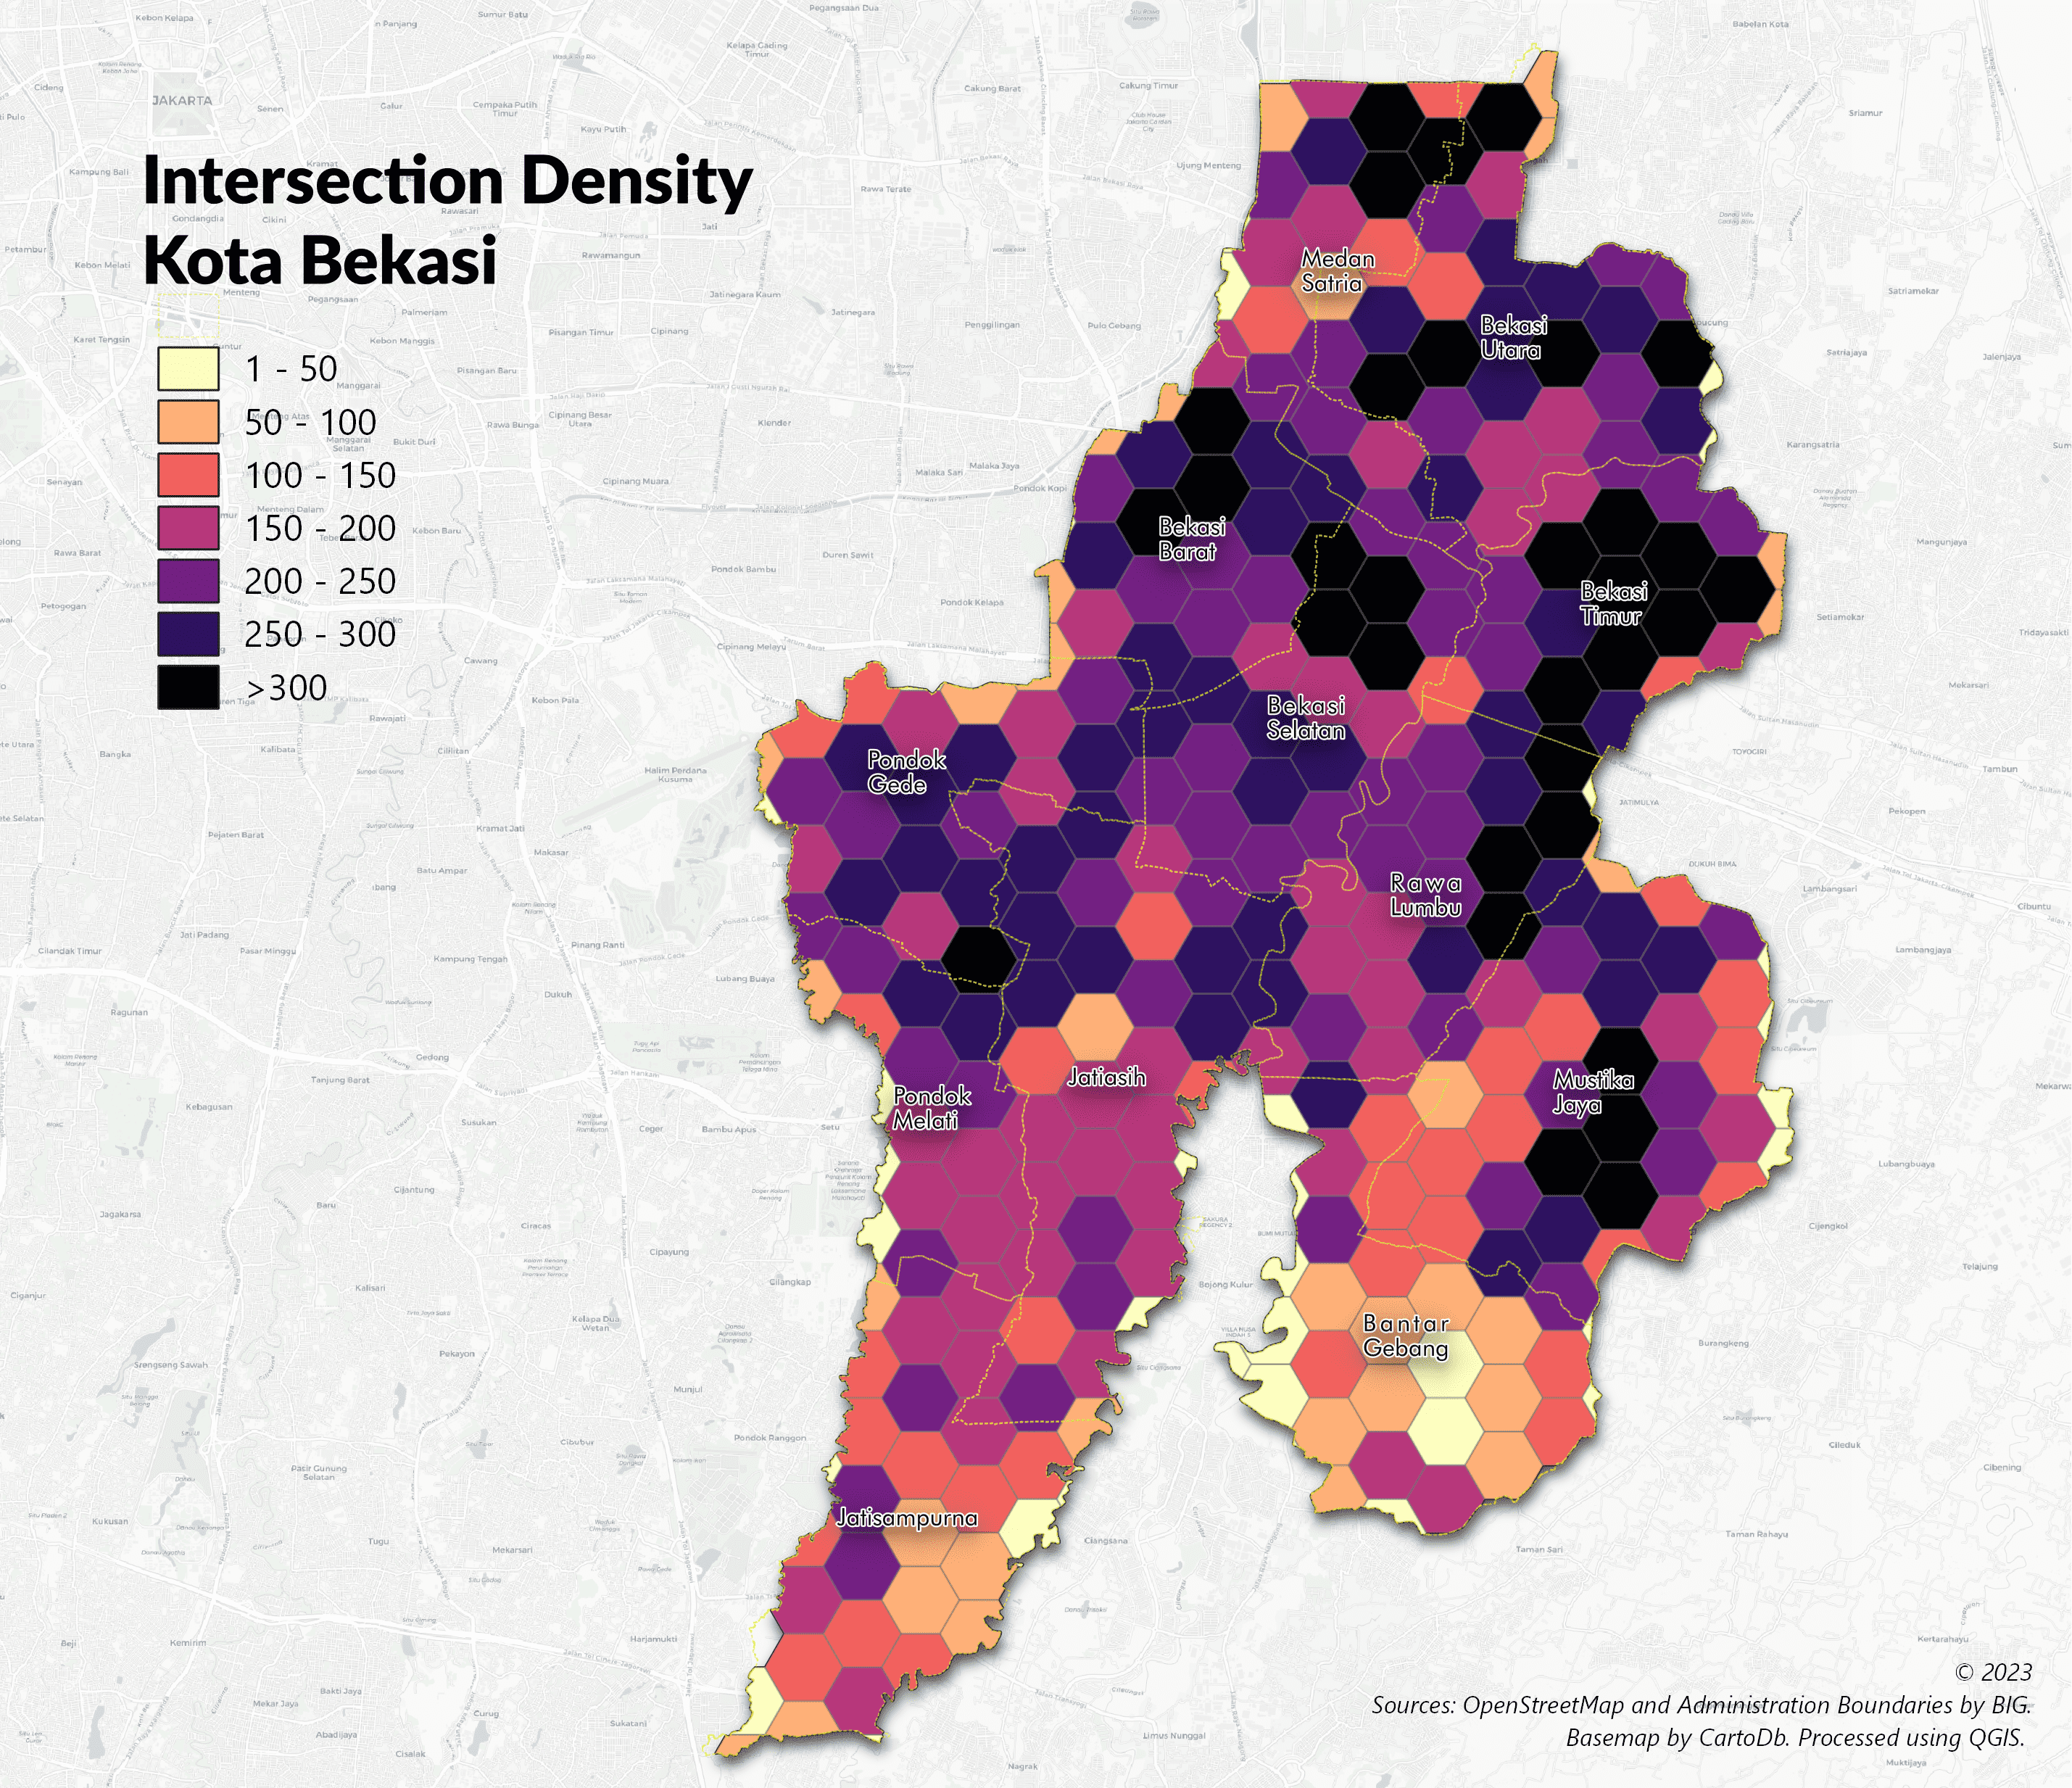 Intersection Density in Kota Bekasi